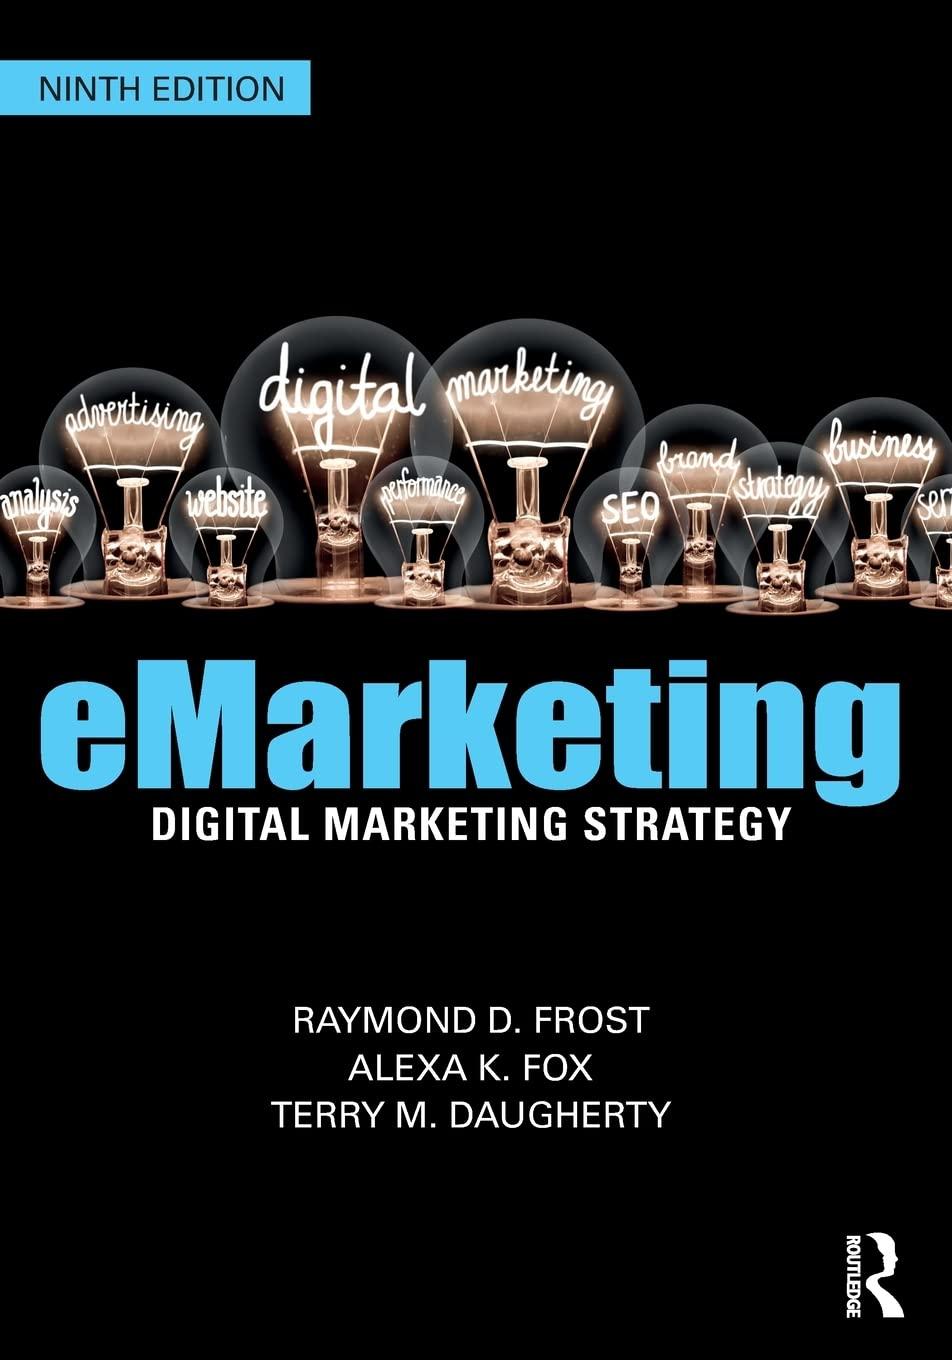 emarketing digital marketing strategy 9th edition raymond frost, alexa k. fox, terry daugherty 1032161493,